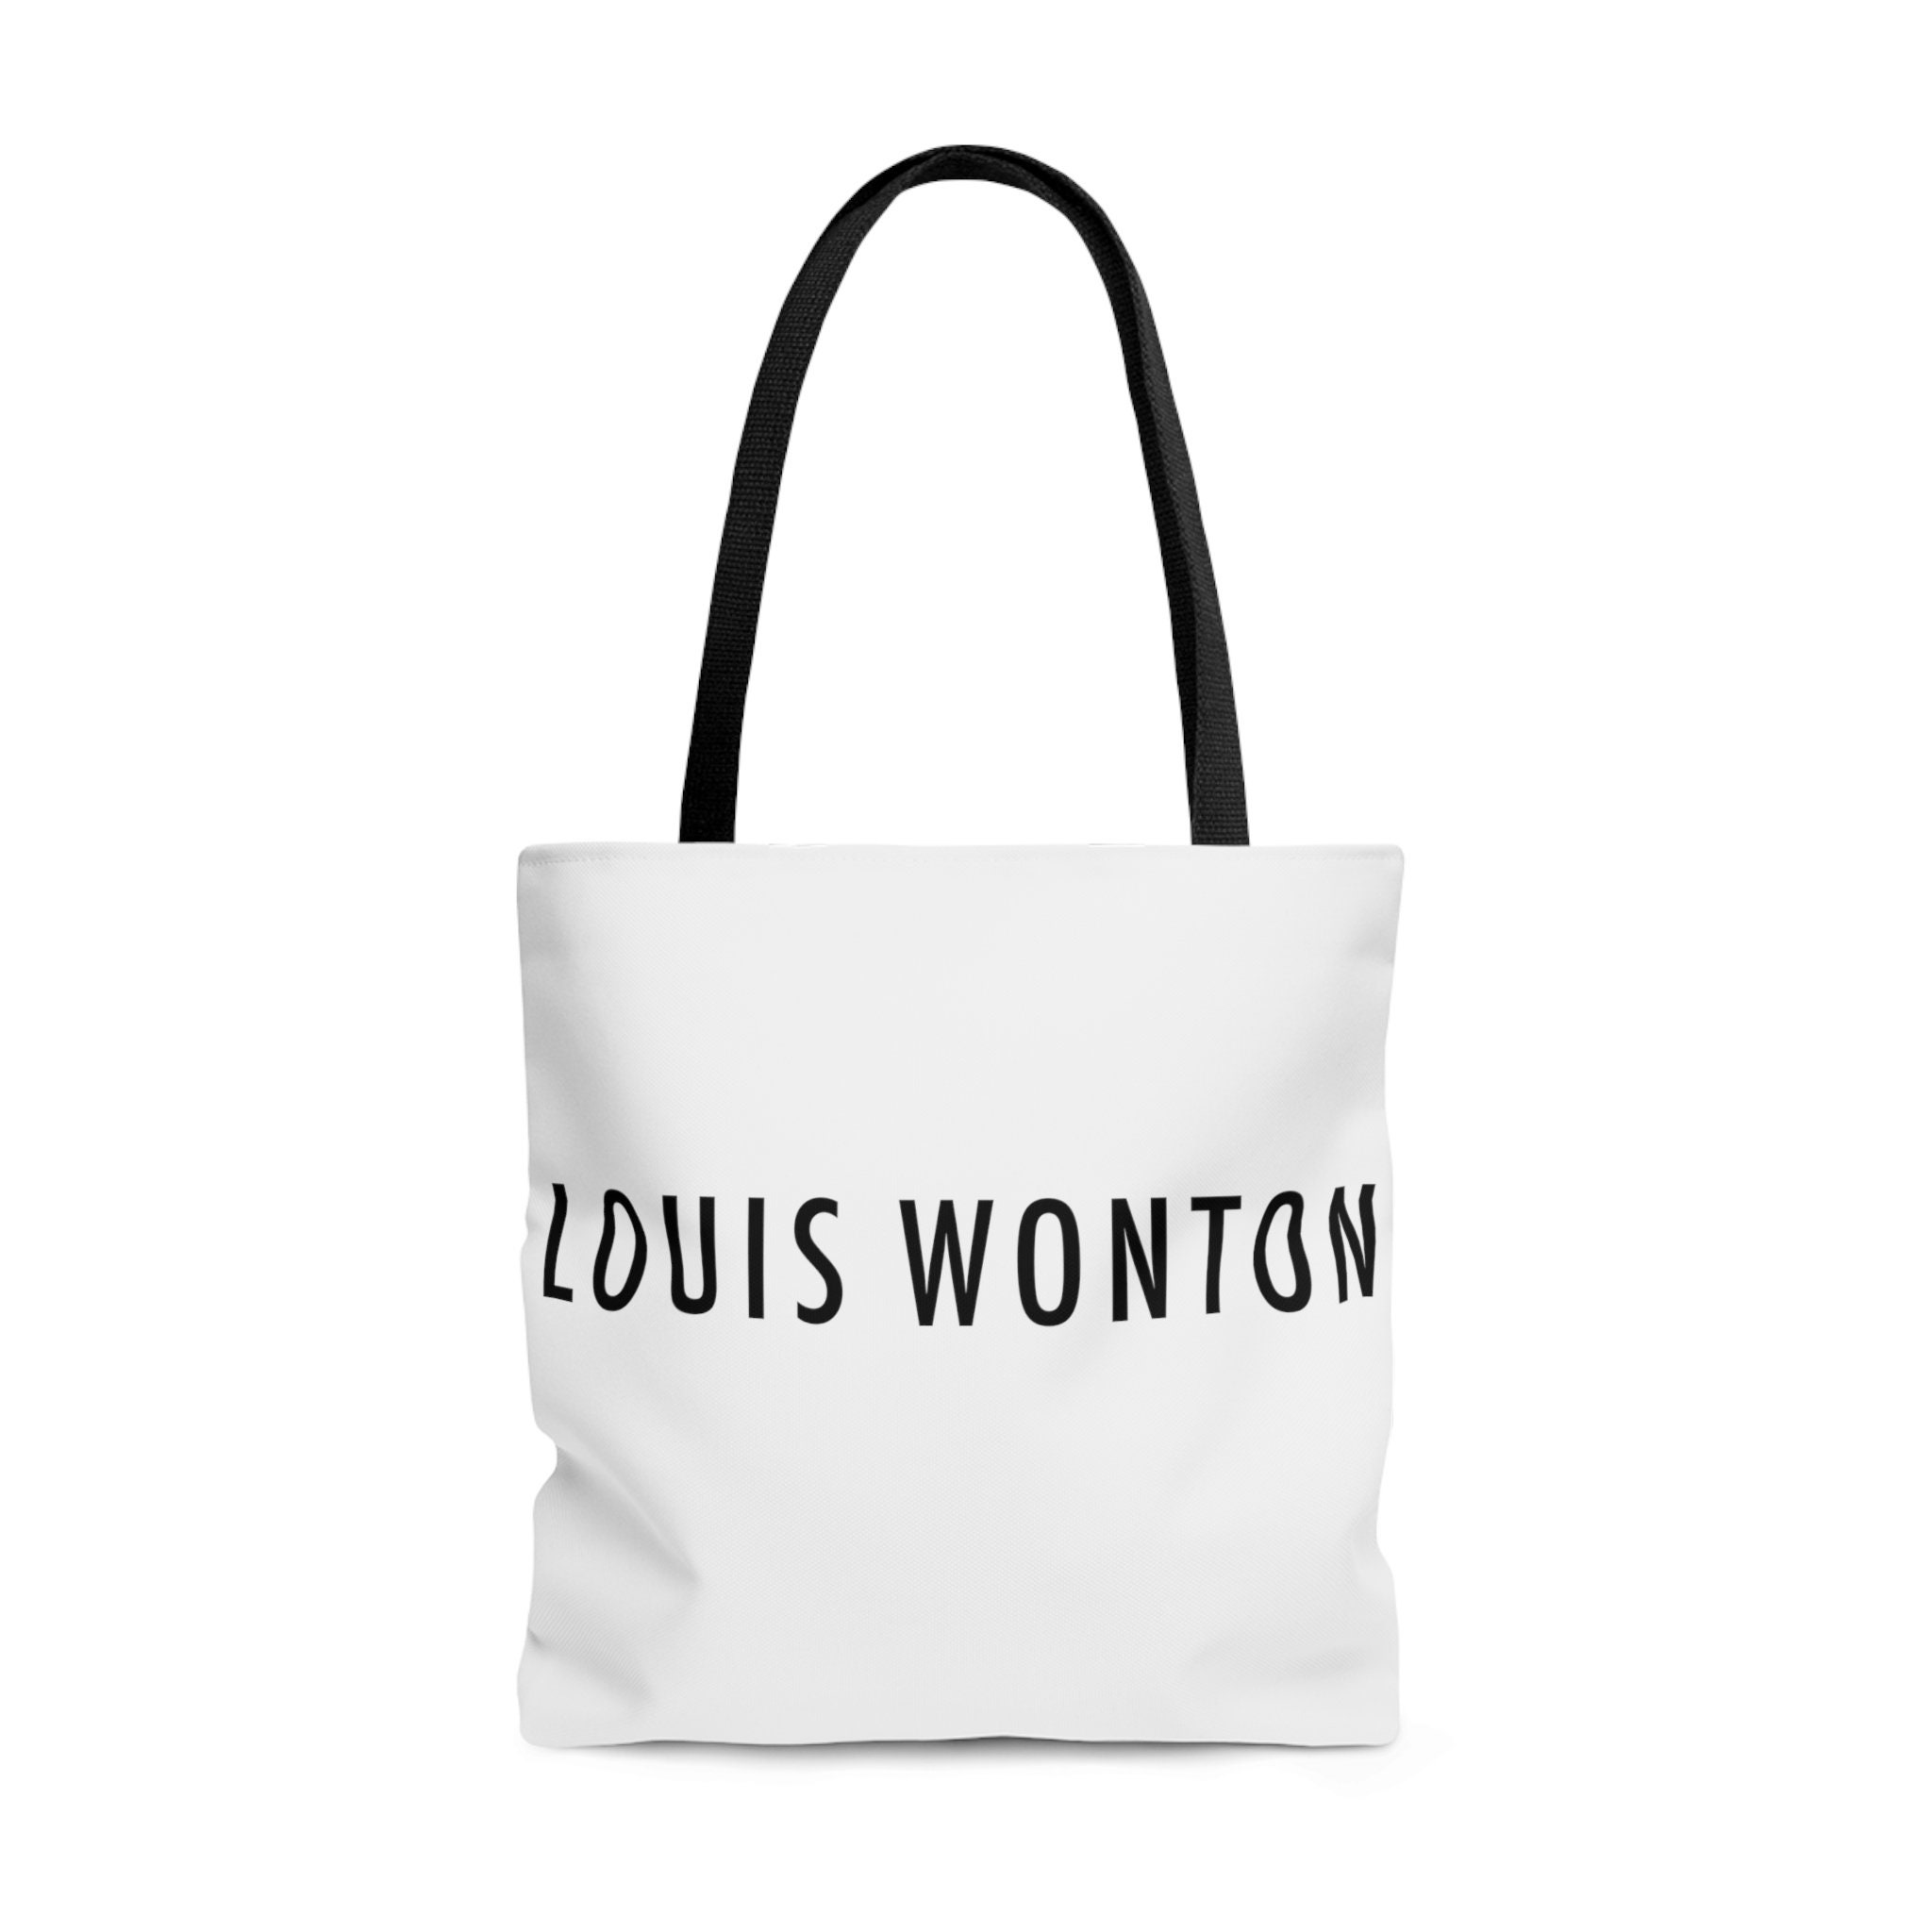 Louis Vuitton Handbags for sale in Phoenix, Arizona